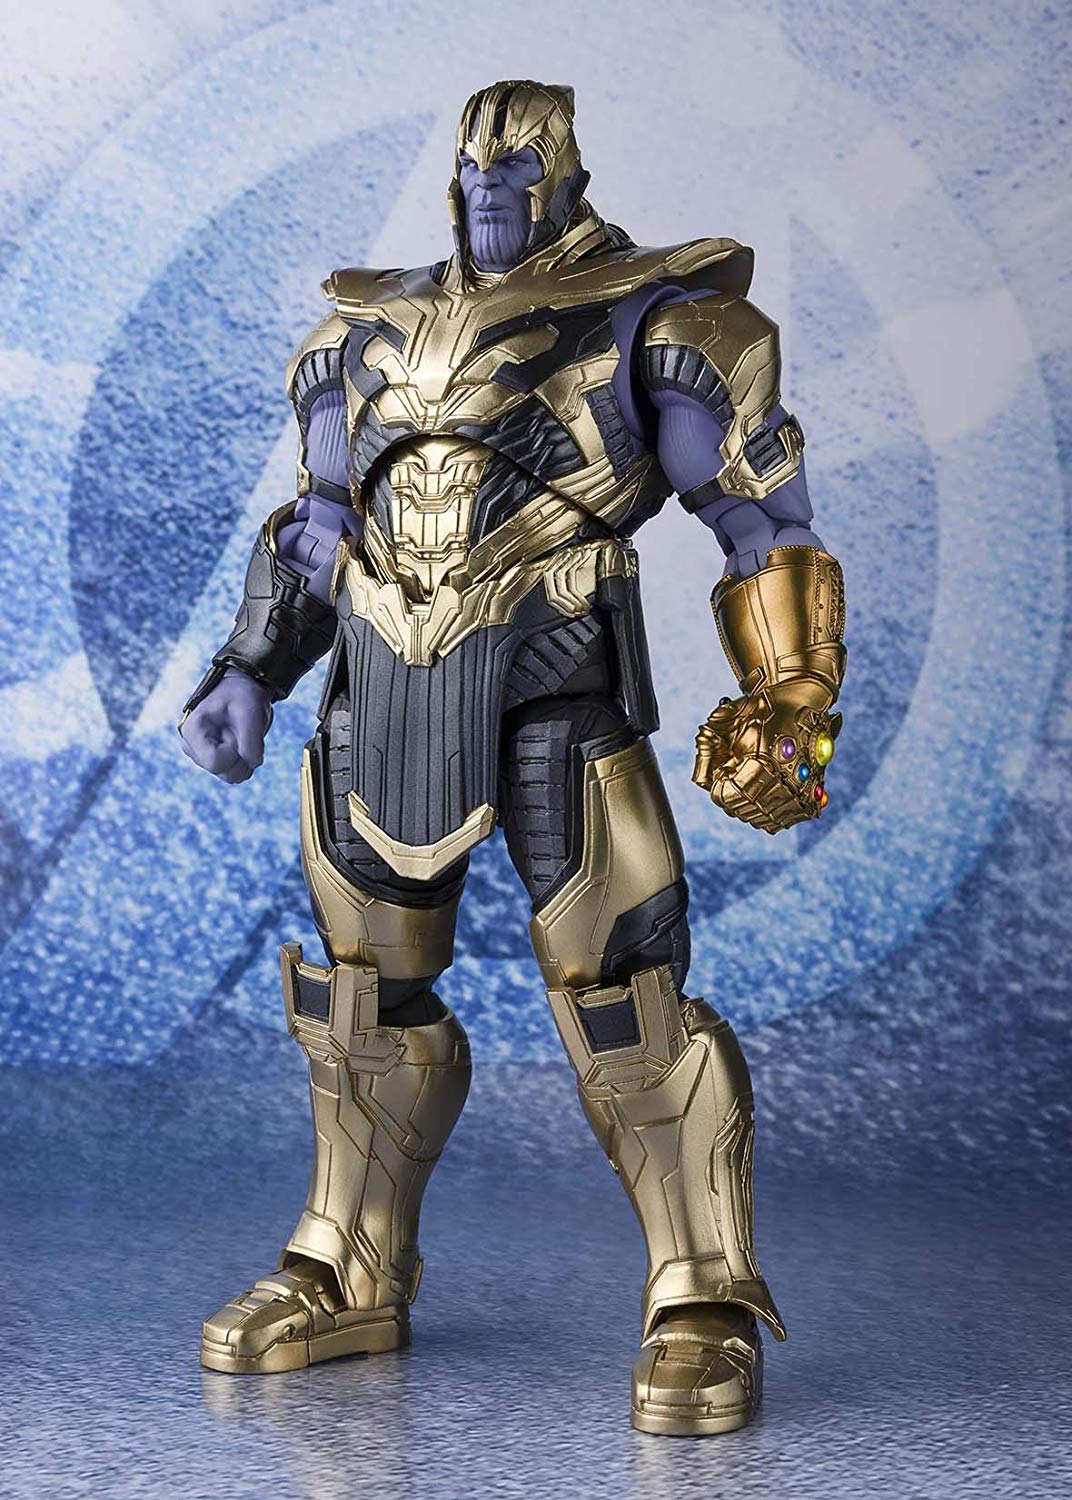 SH Figuarts Endgame Thanos Figure Up for Order in the US! - SH Figuarts EnDgame Thanos US Release Action Figure